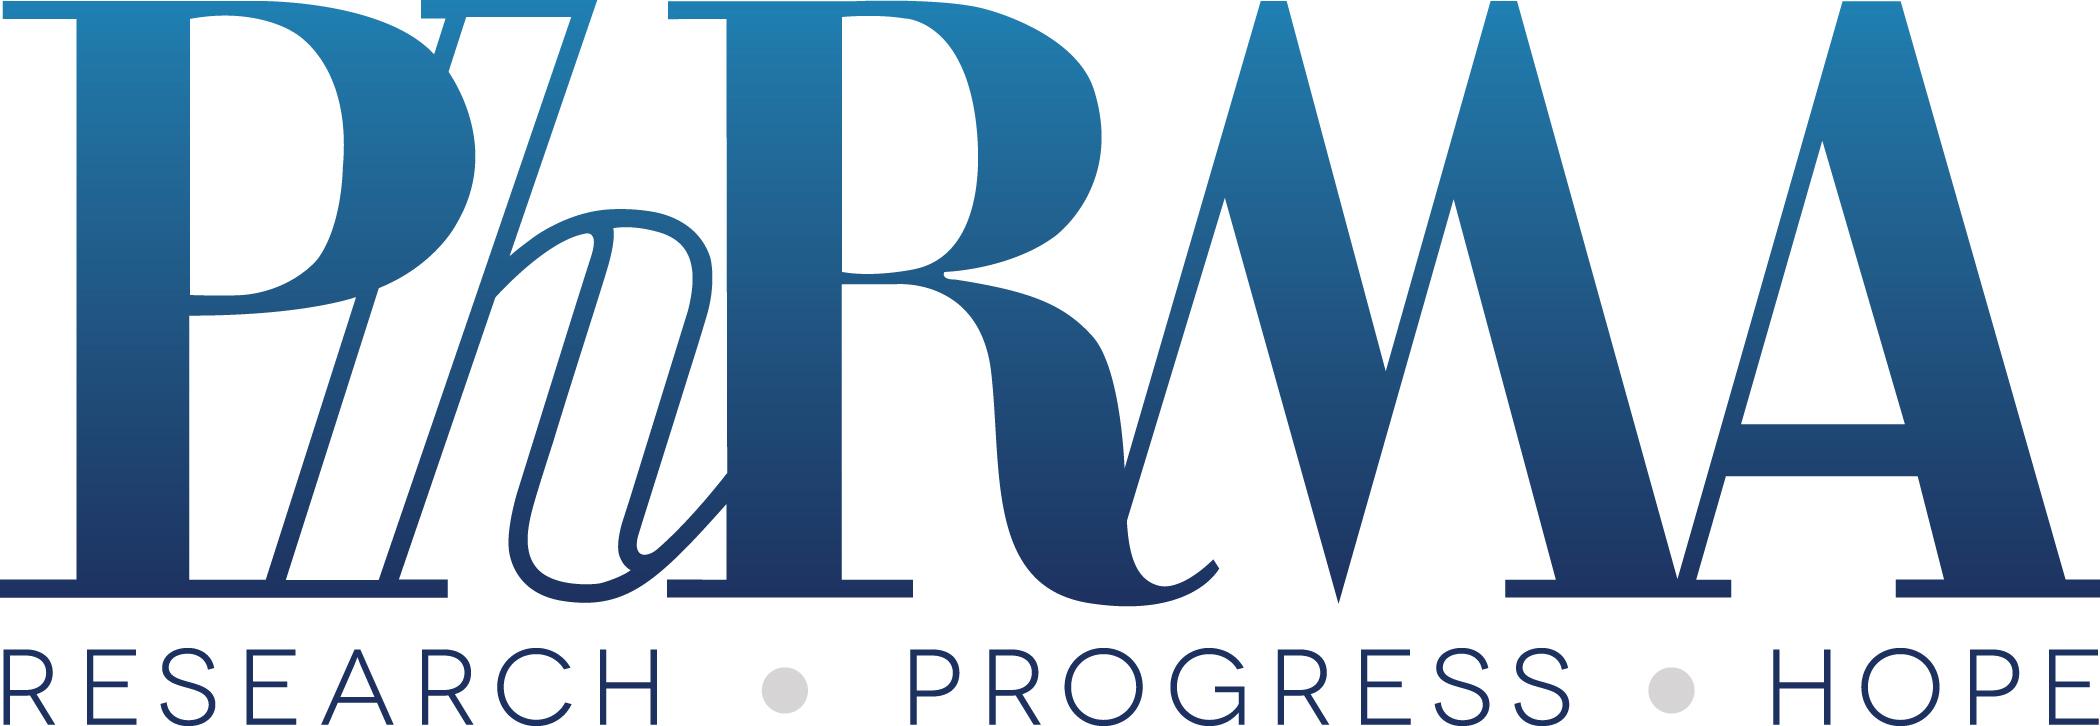 logo for PhRMA Research Progress Hope